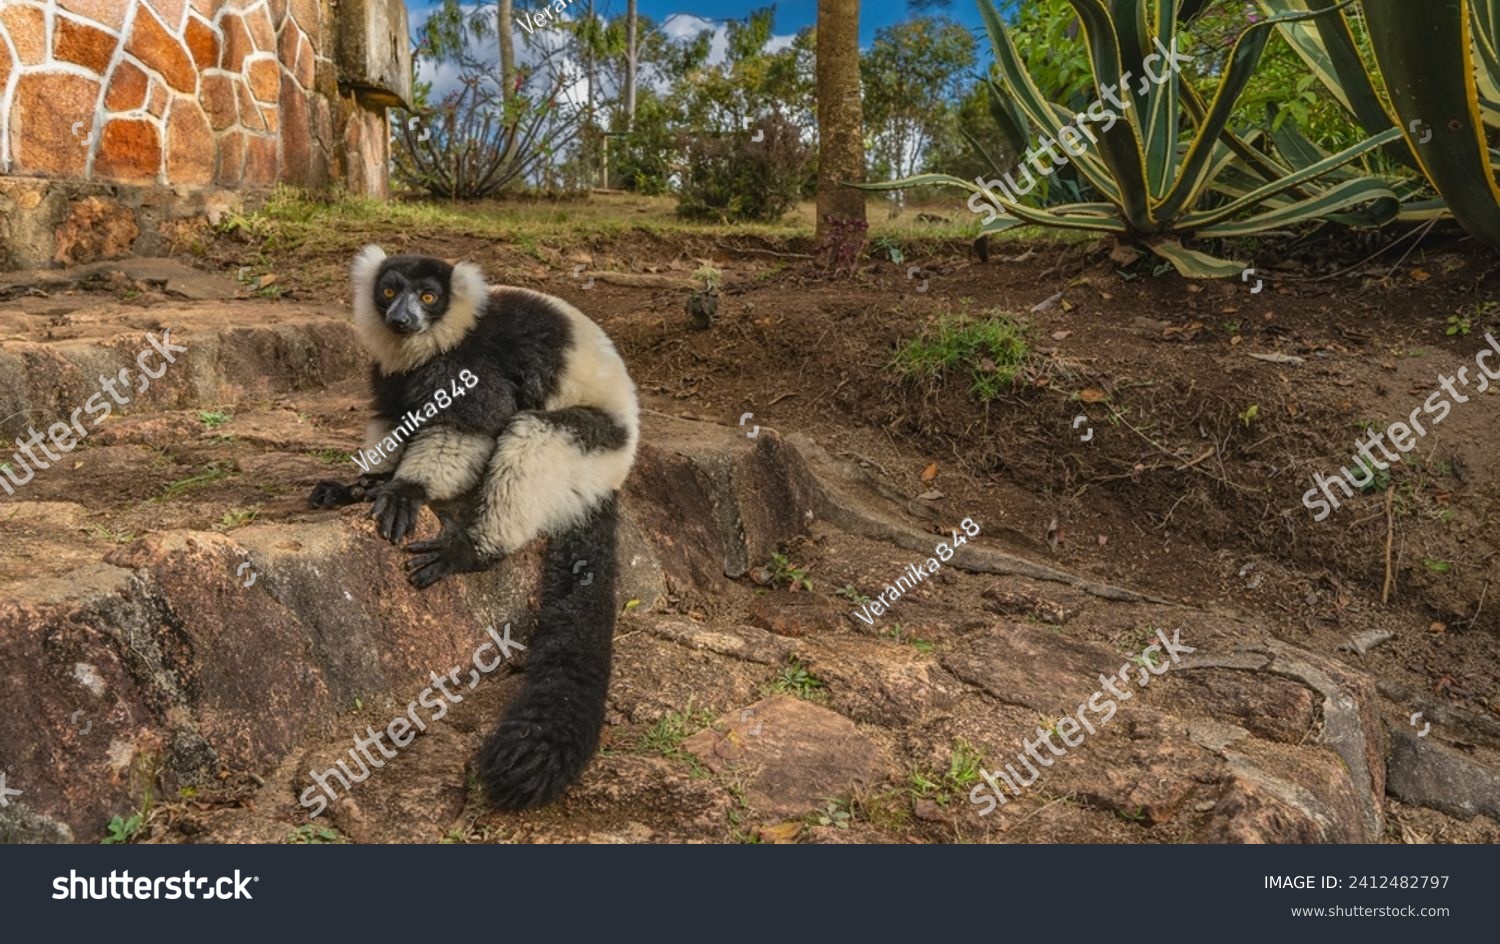 Charming lemur vari Varecia variegata is sitting on the stone steps, looking at the camera. Fluffy black and white fur, long tail, bright orange eyes, long toes.Madagascar. Nosy Soa Park. #2412482797